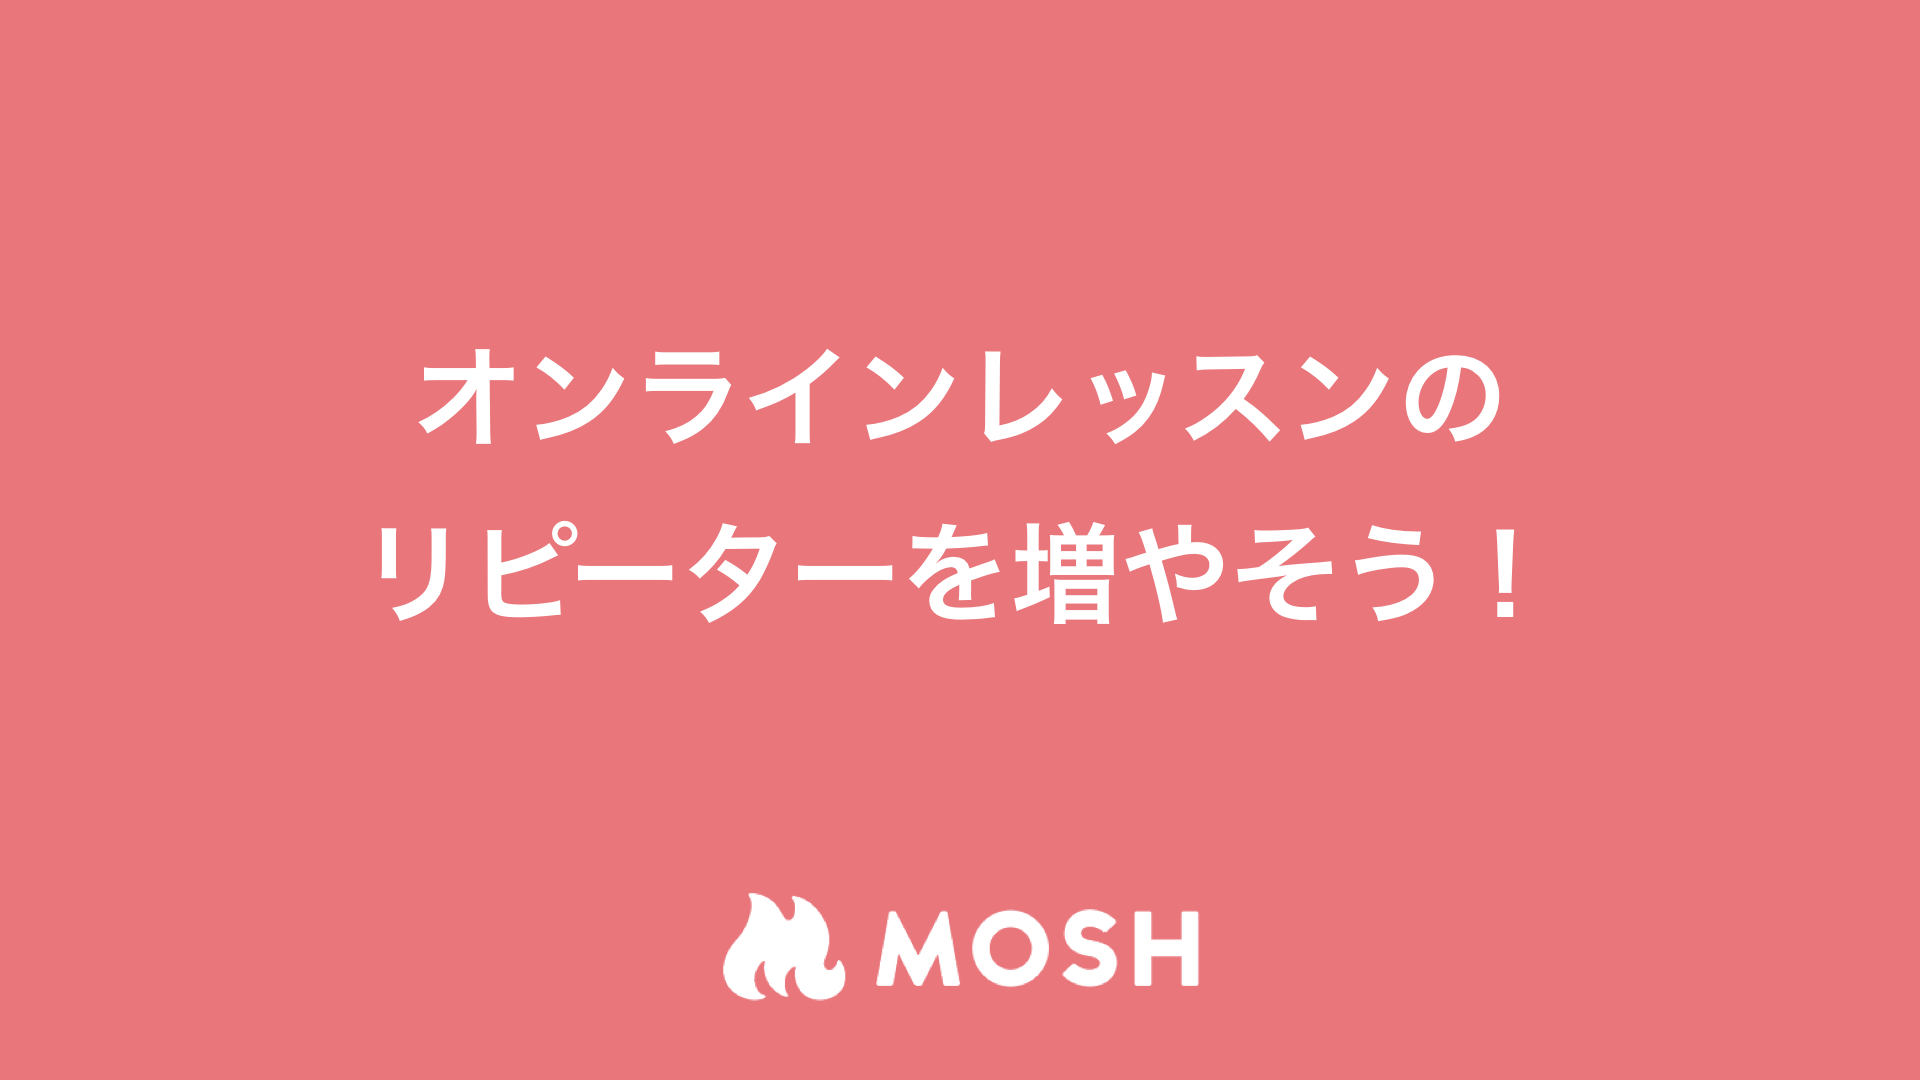 MOSHサムネイル2.005 | MOSH Magazine